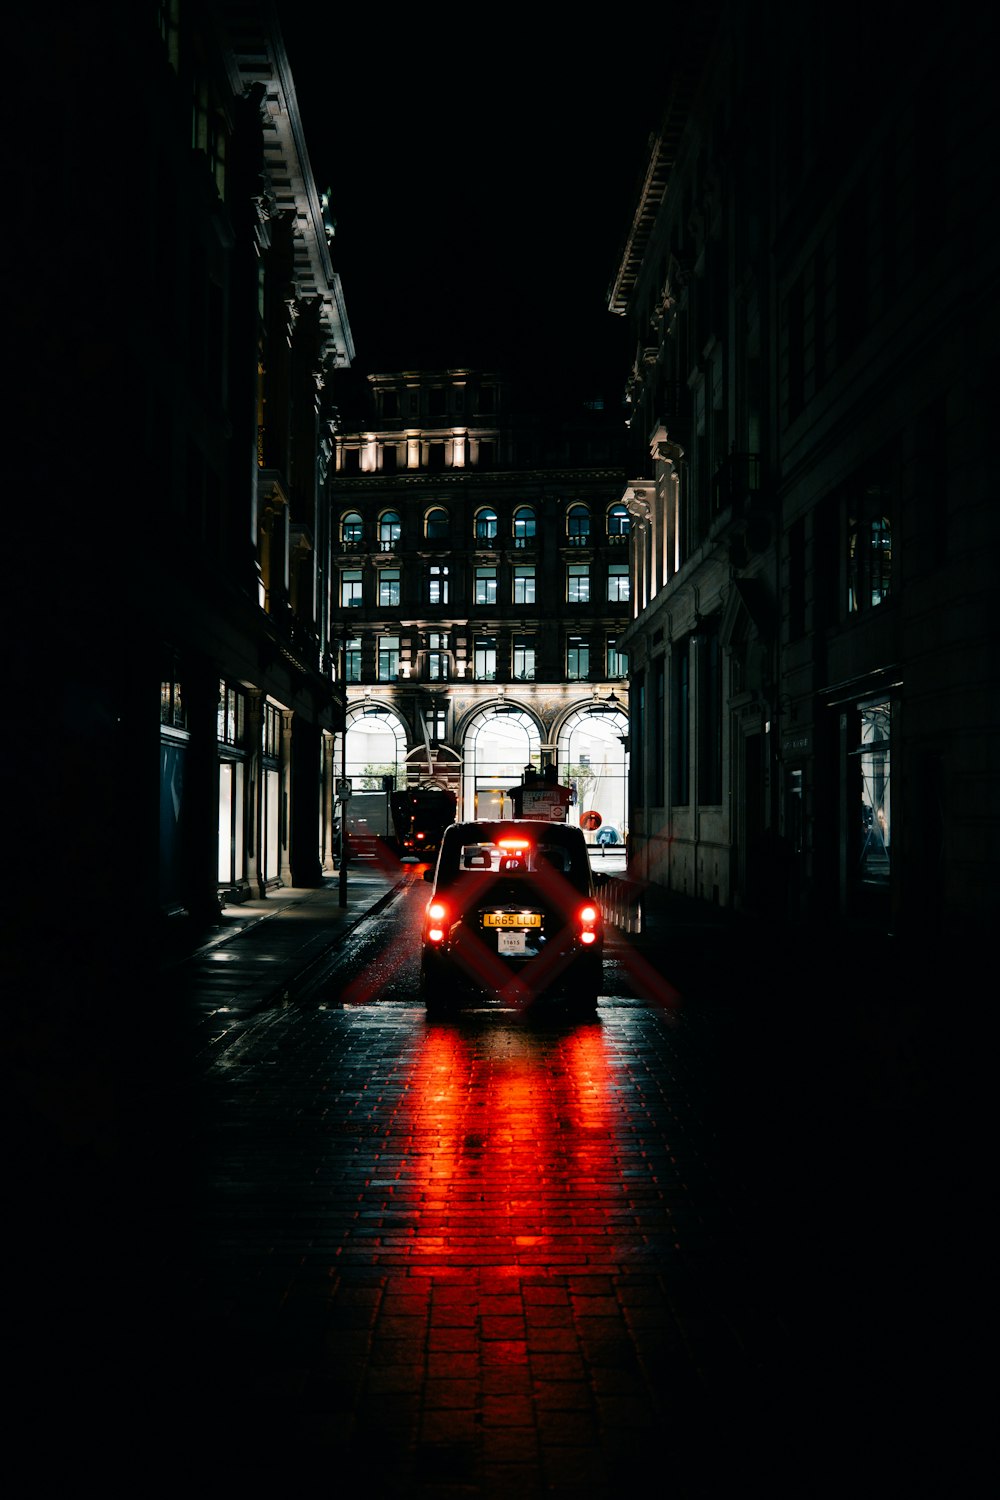 a car driving down a street at night